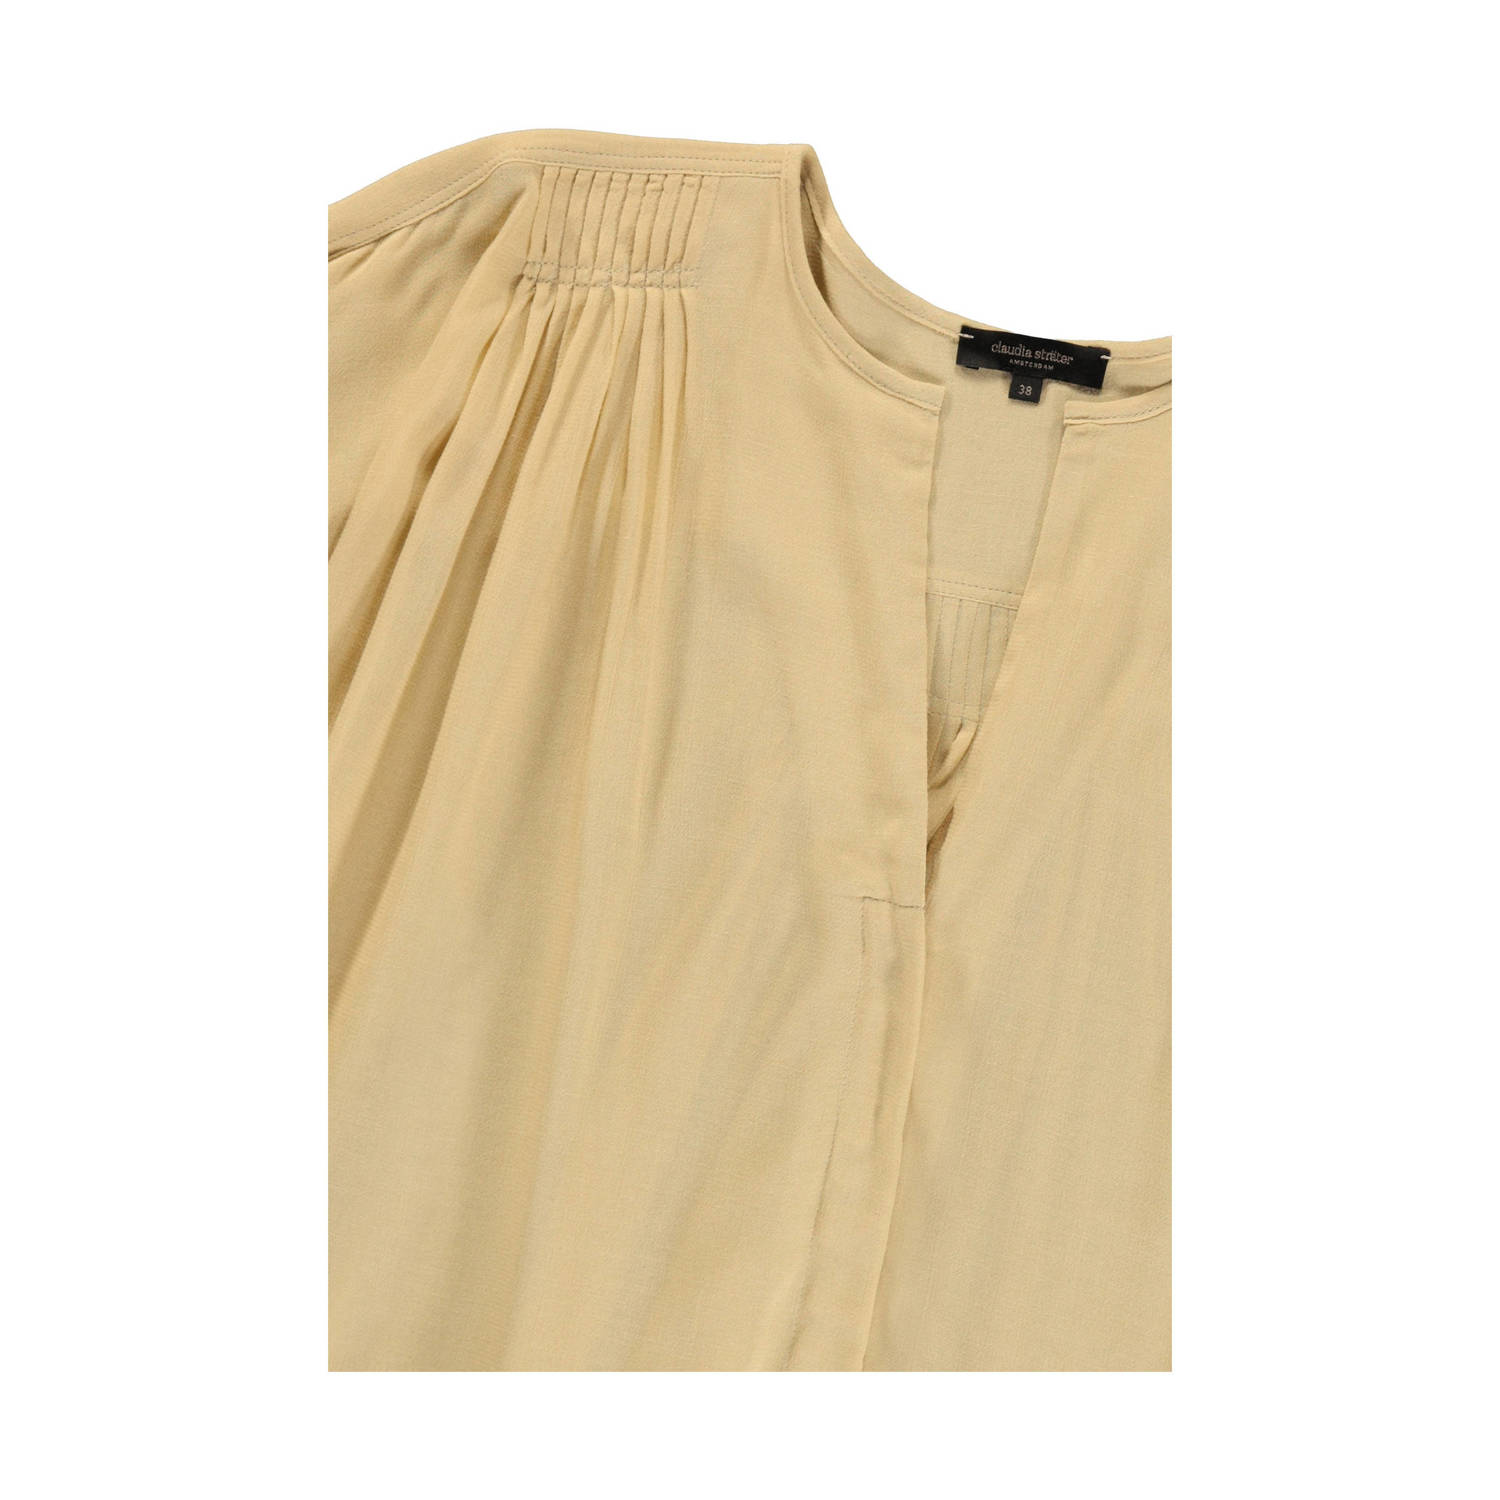 Claudia Sträter blousetop beige